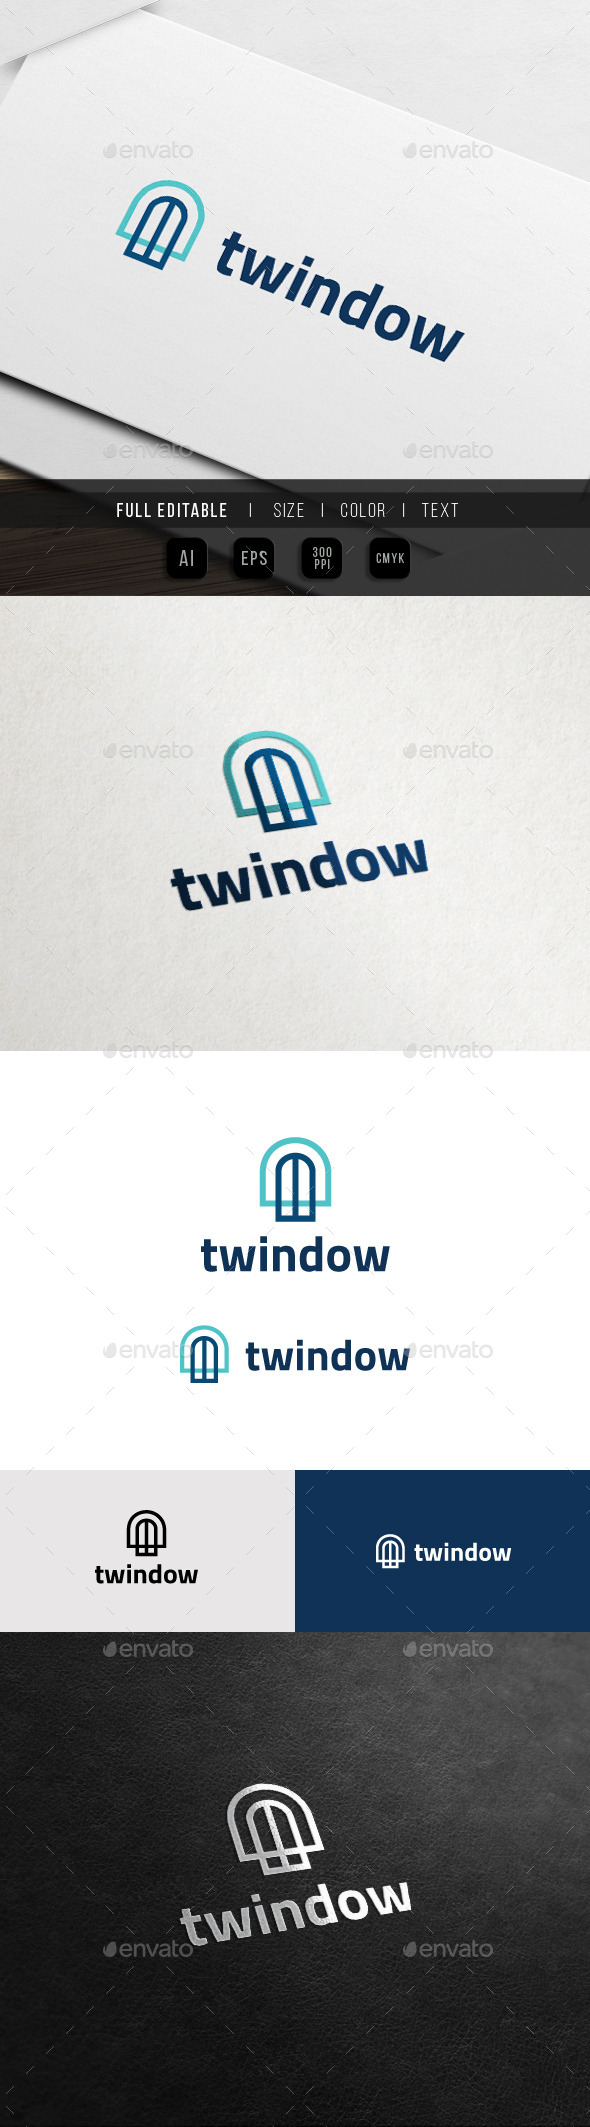 Twin Window - House Service Logo